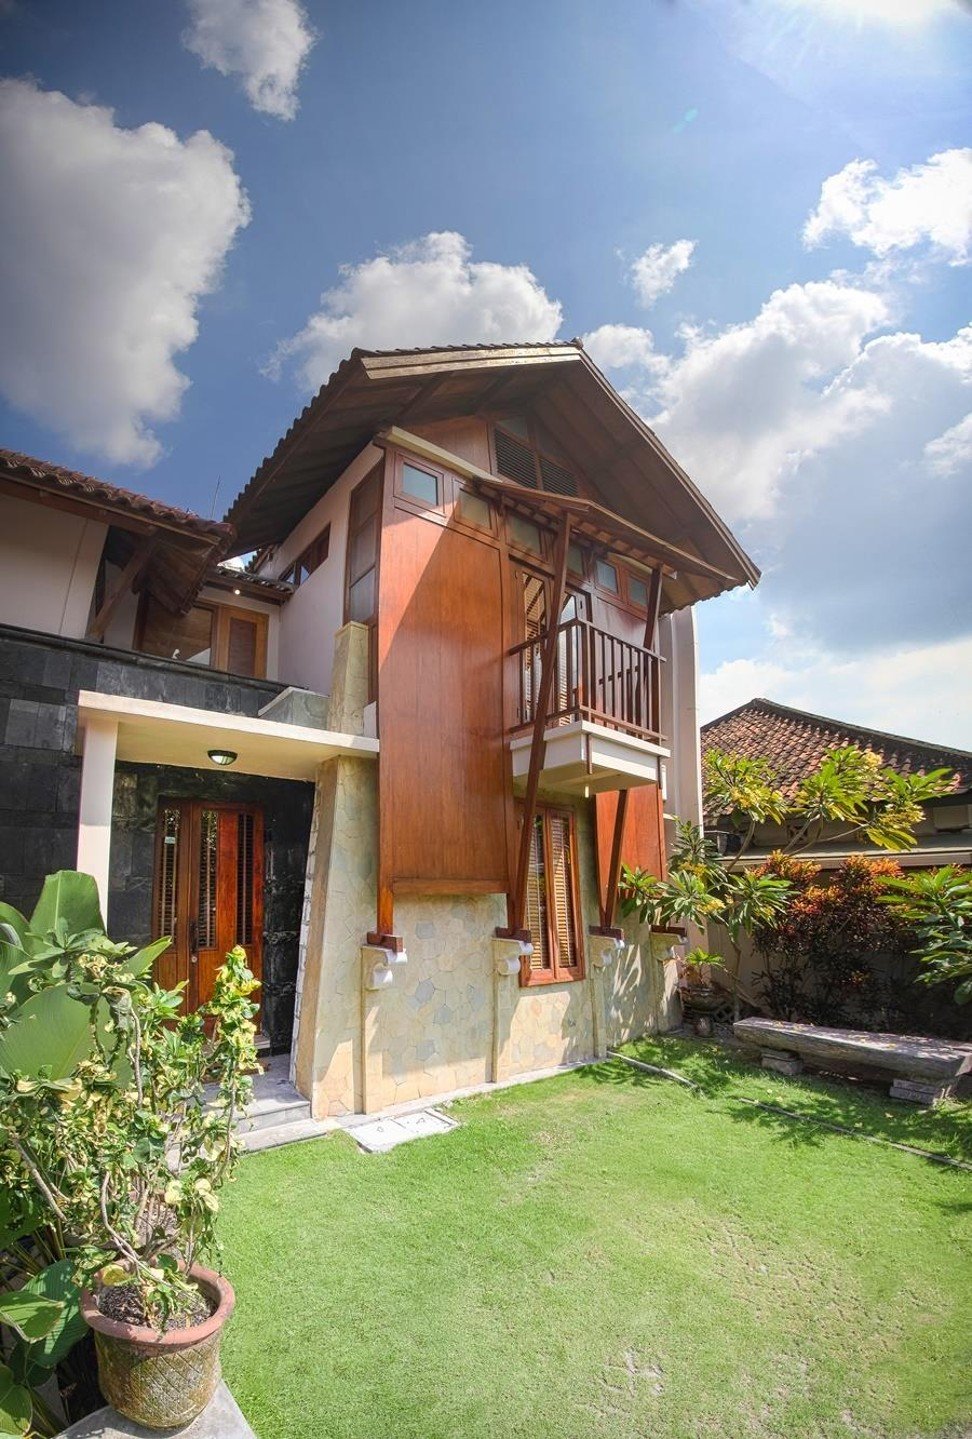 Tegal Panggung Guest House in Yogyakarta.